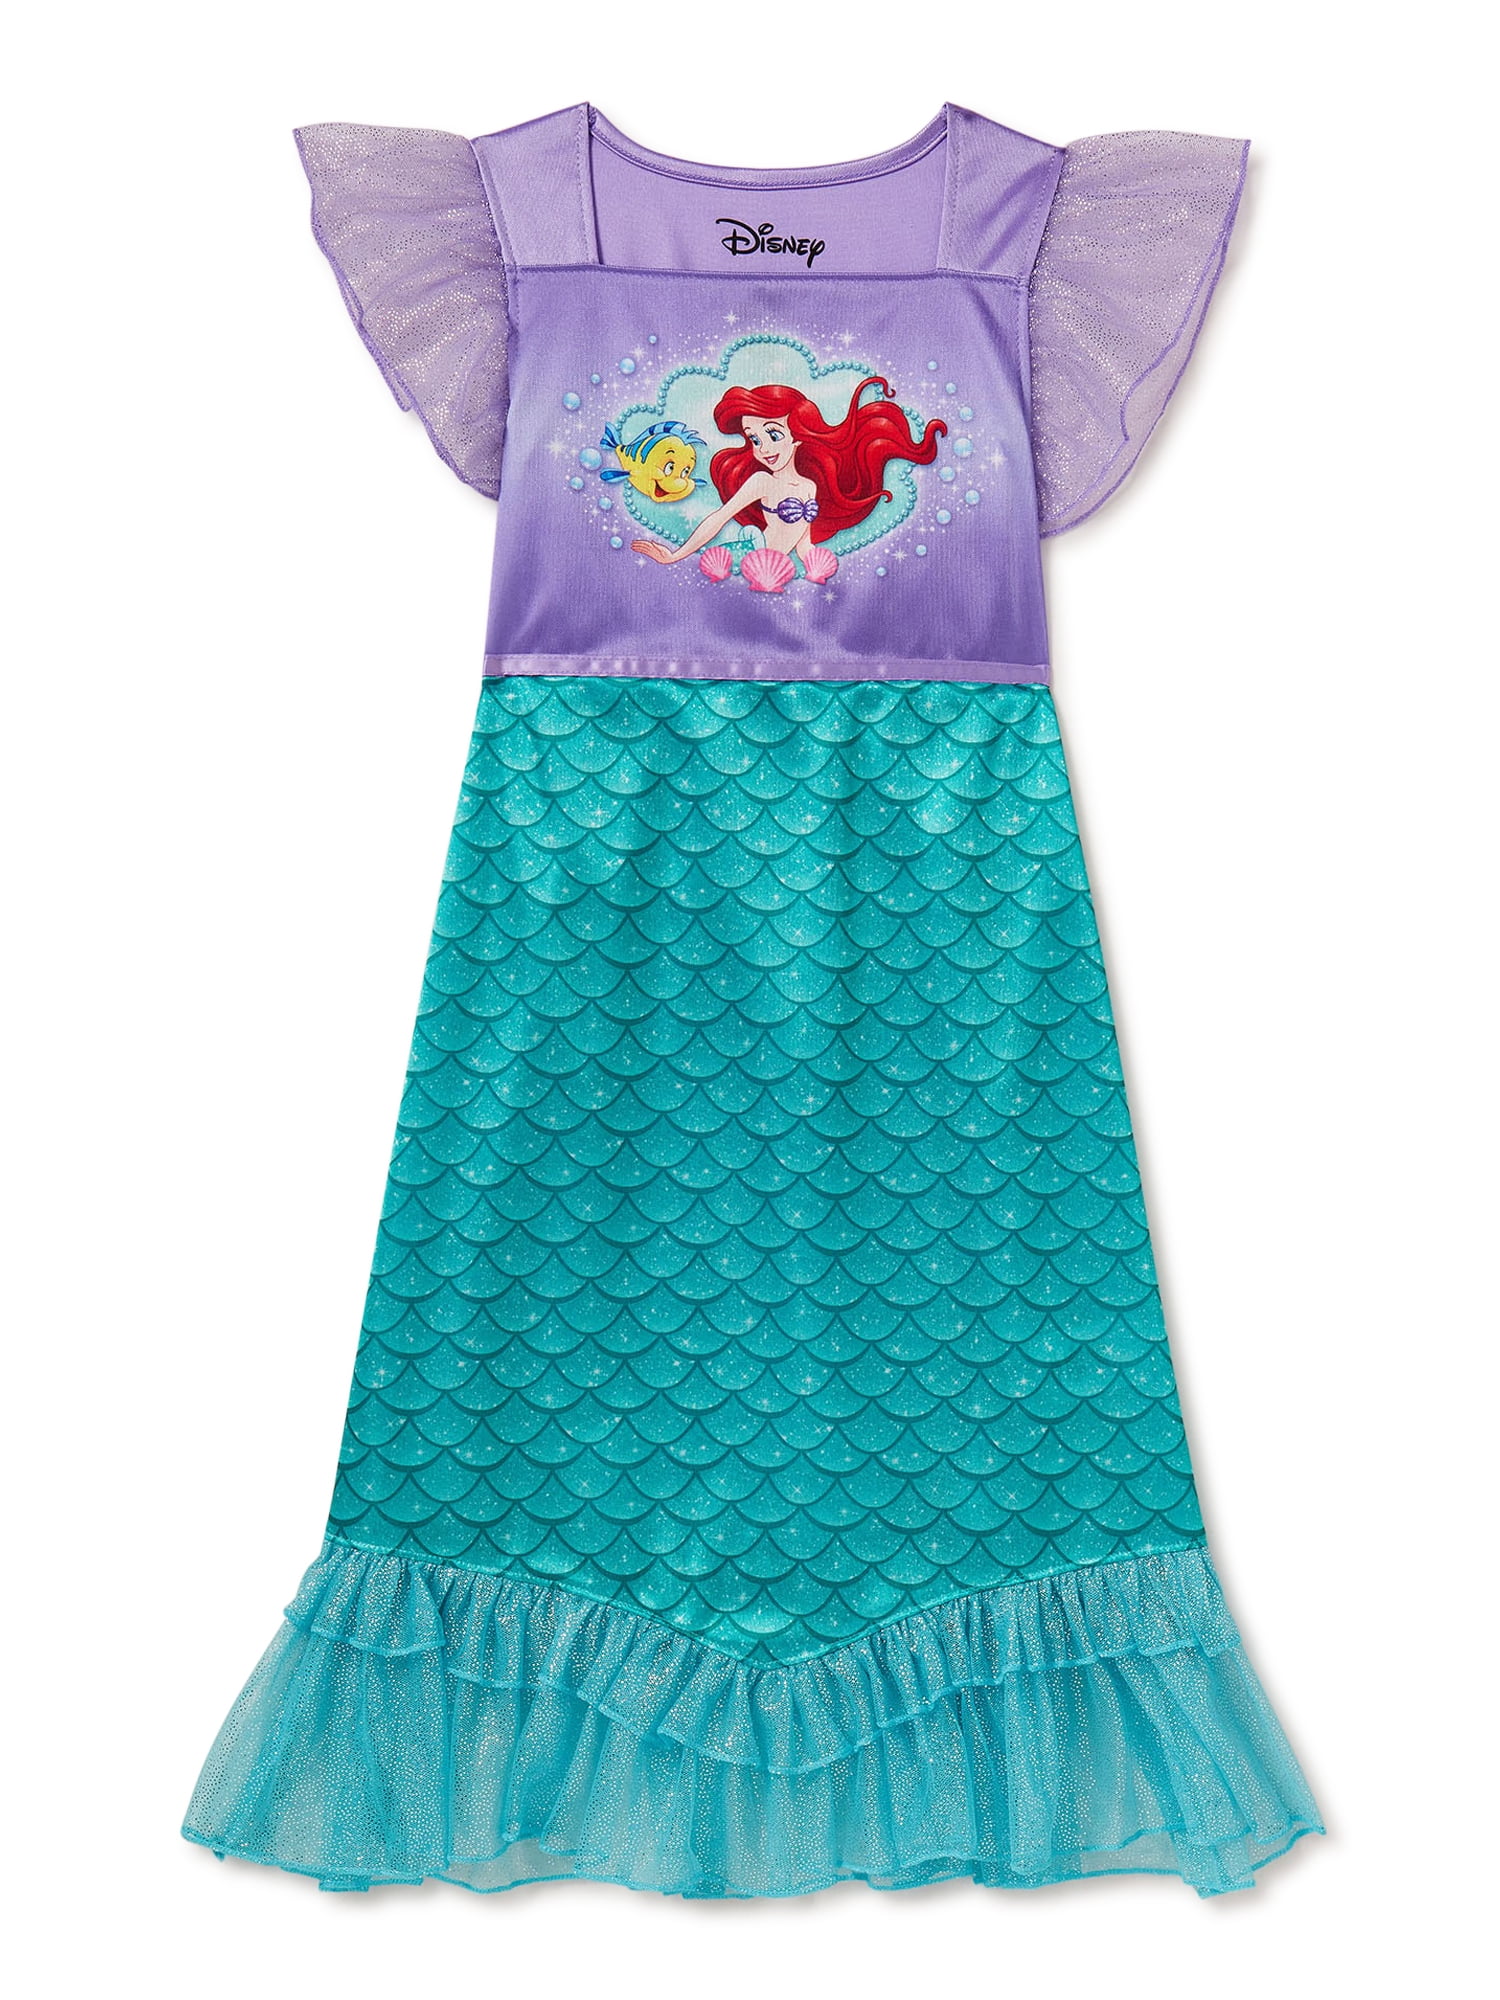 Women's Disney Little Mermaid Nightgown Green w/Ariel Print Polyester Cotton 